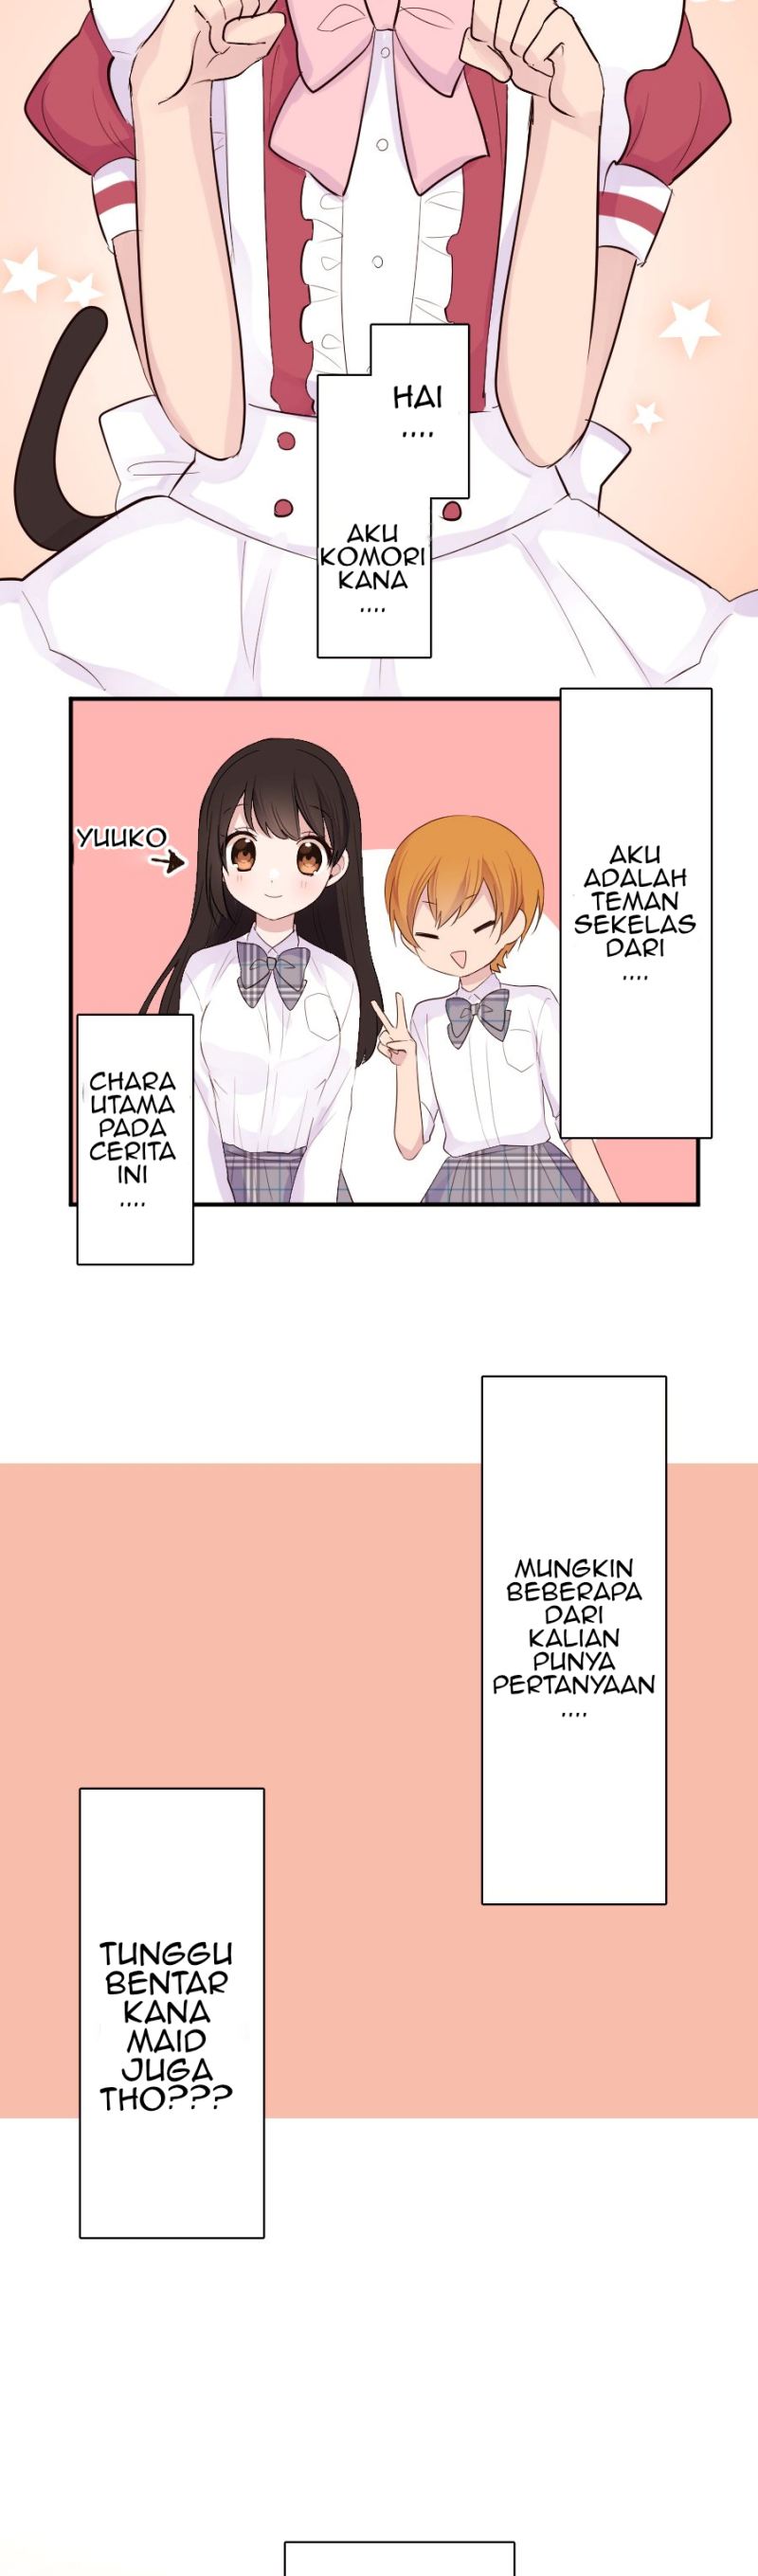 Class Maid (shimamura) Chapter 28